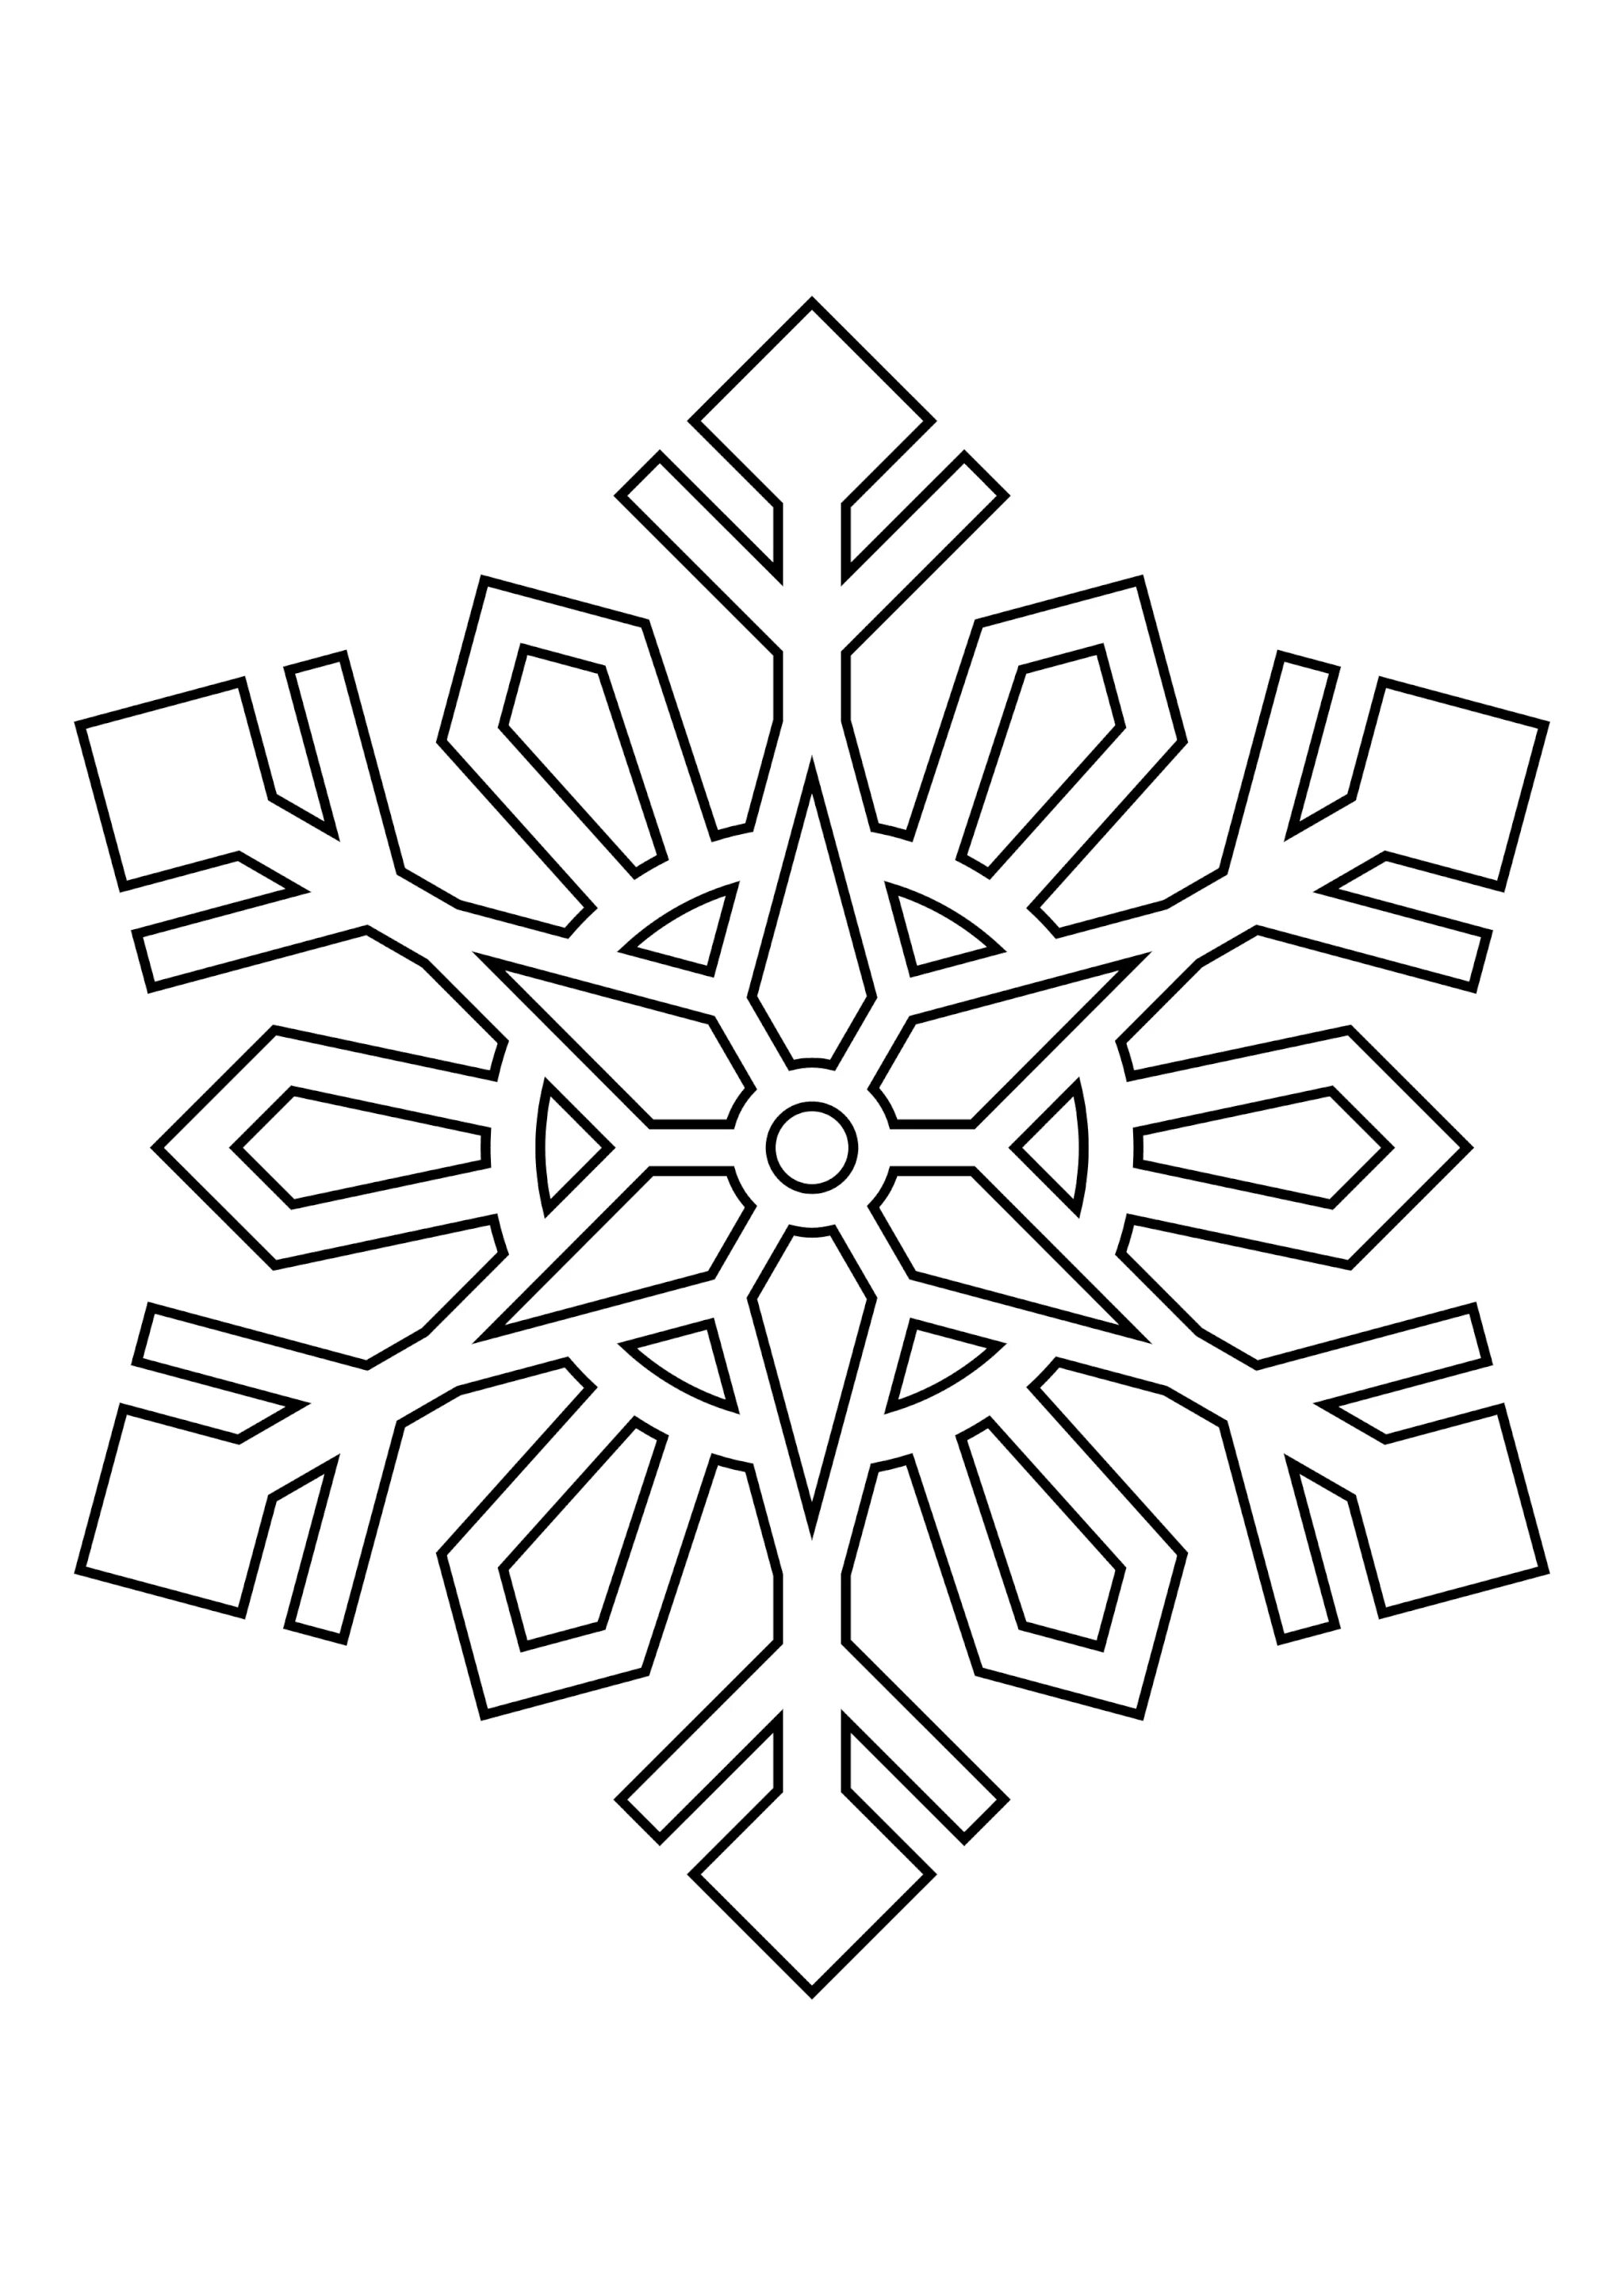 Snowflake pattern #6